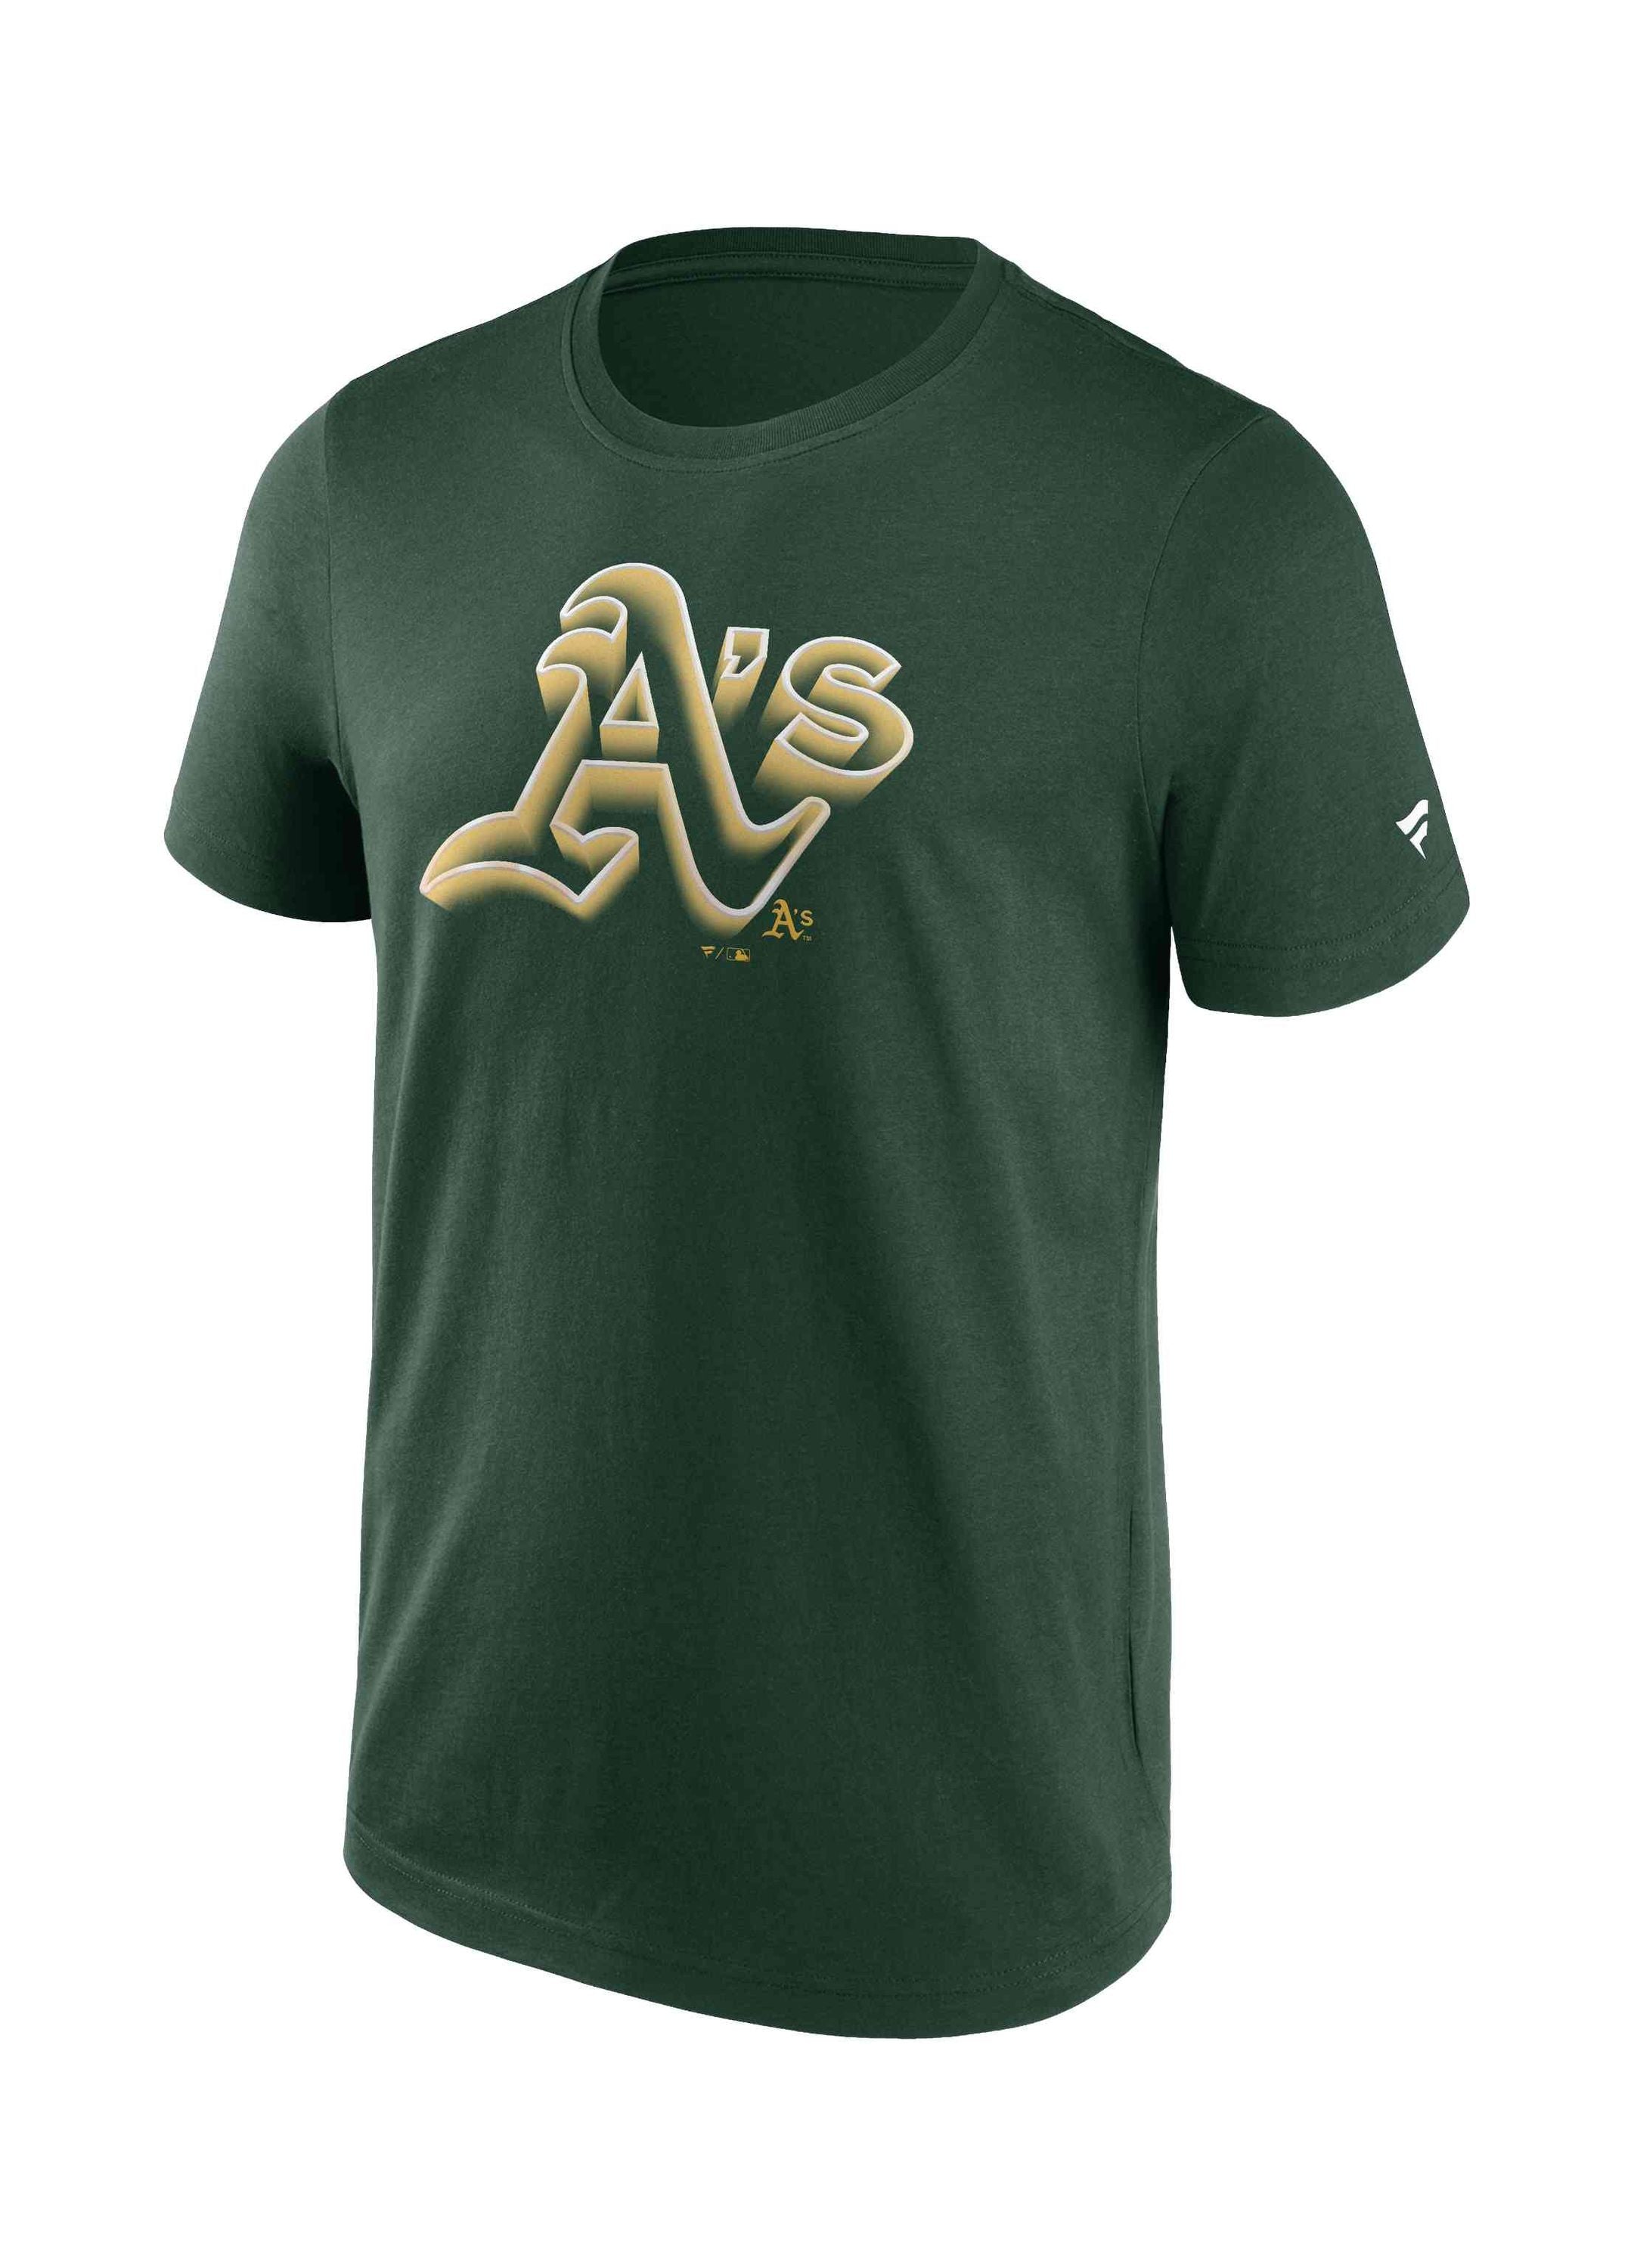 Fanatics - MLB Oakland Athletics Chrome Graphic T-Shirt